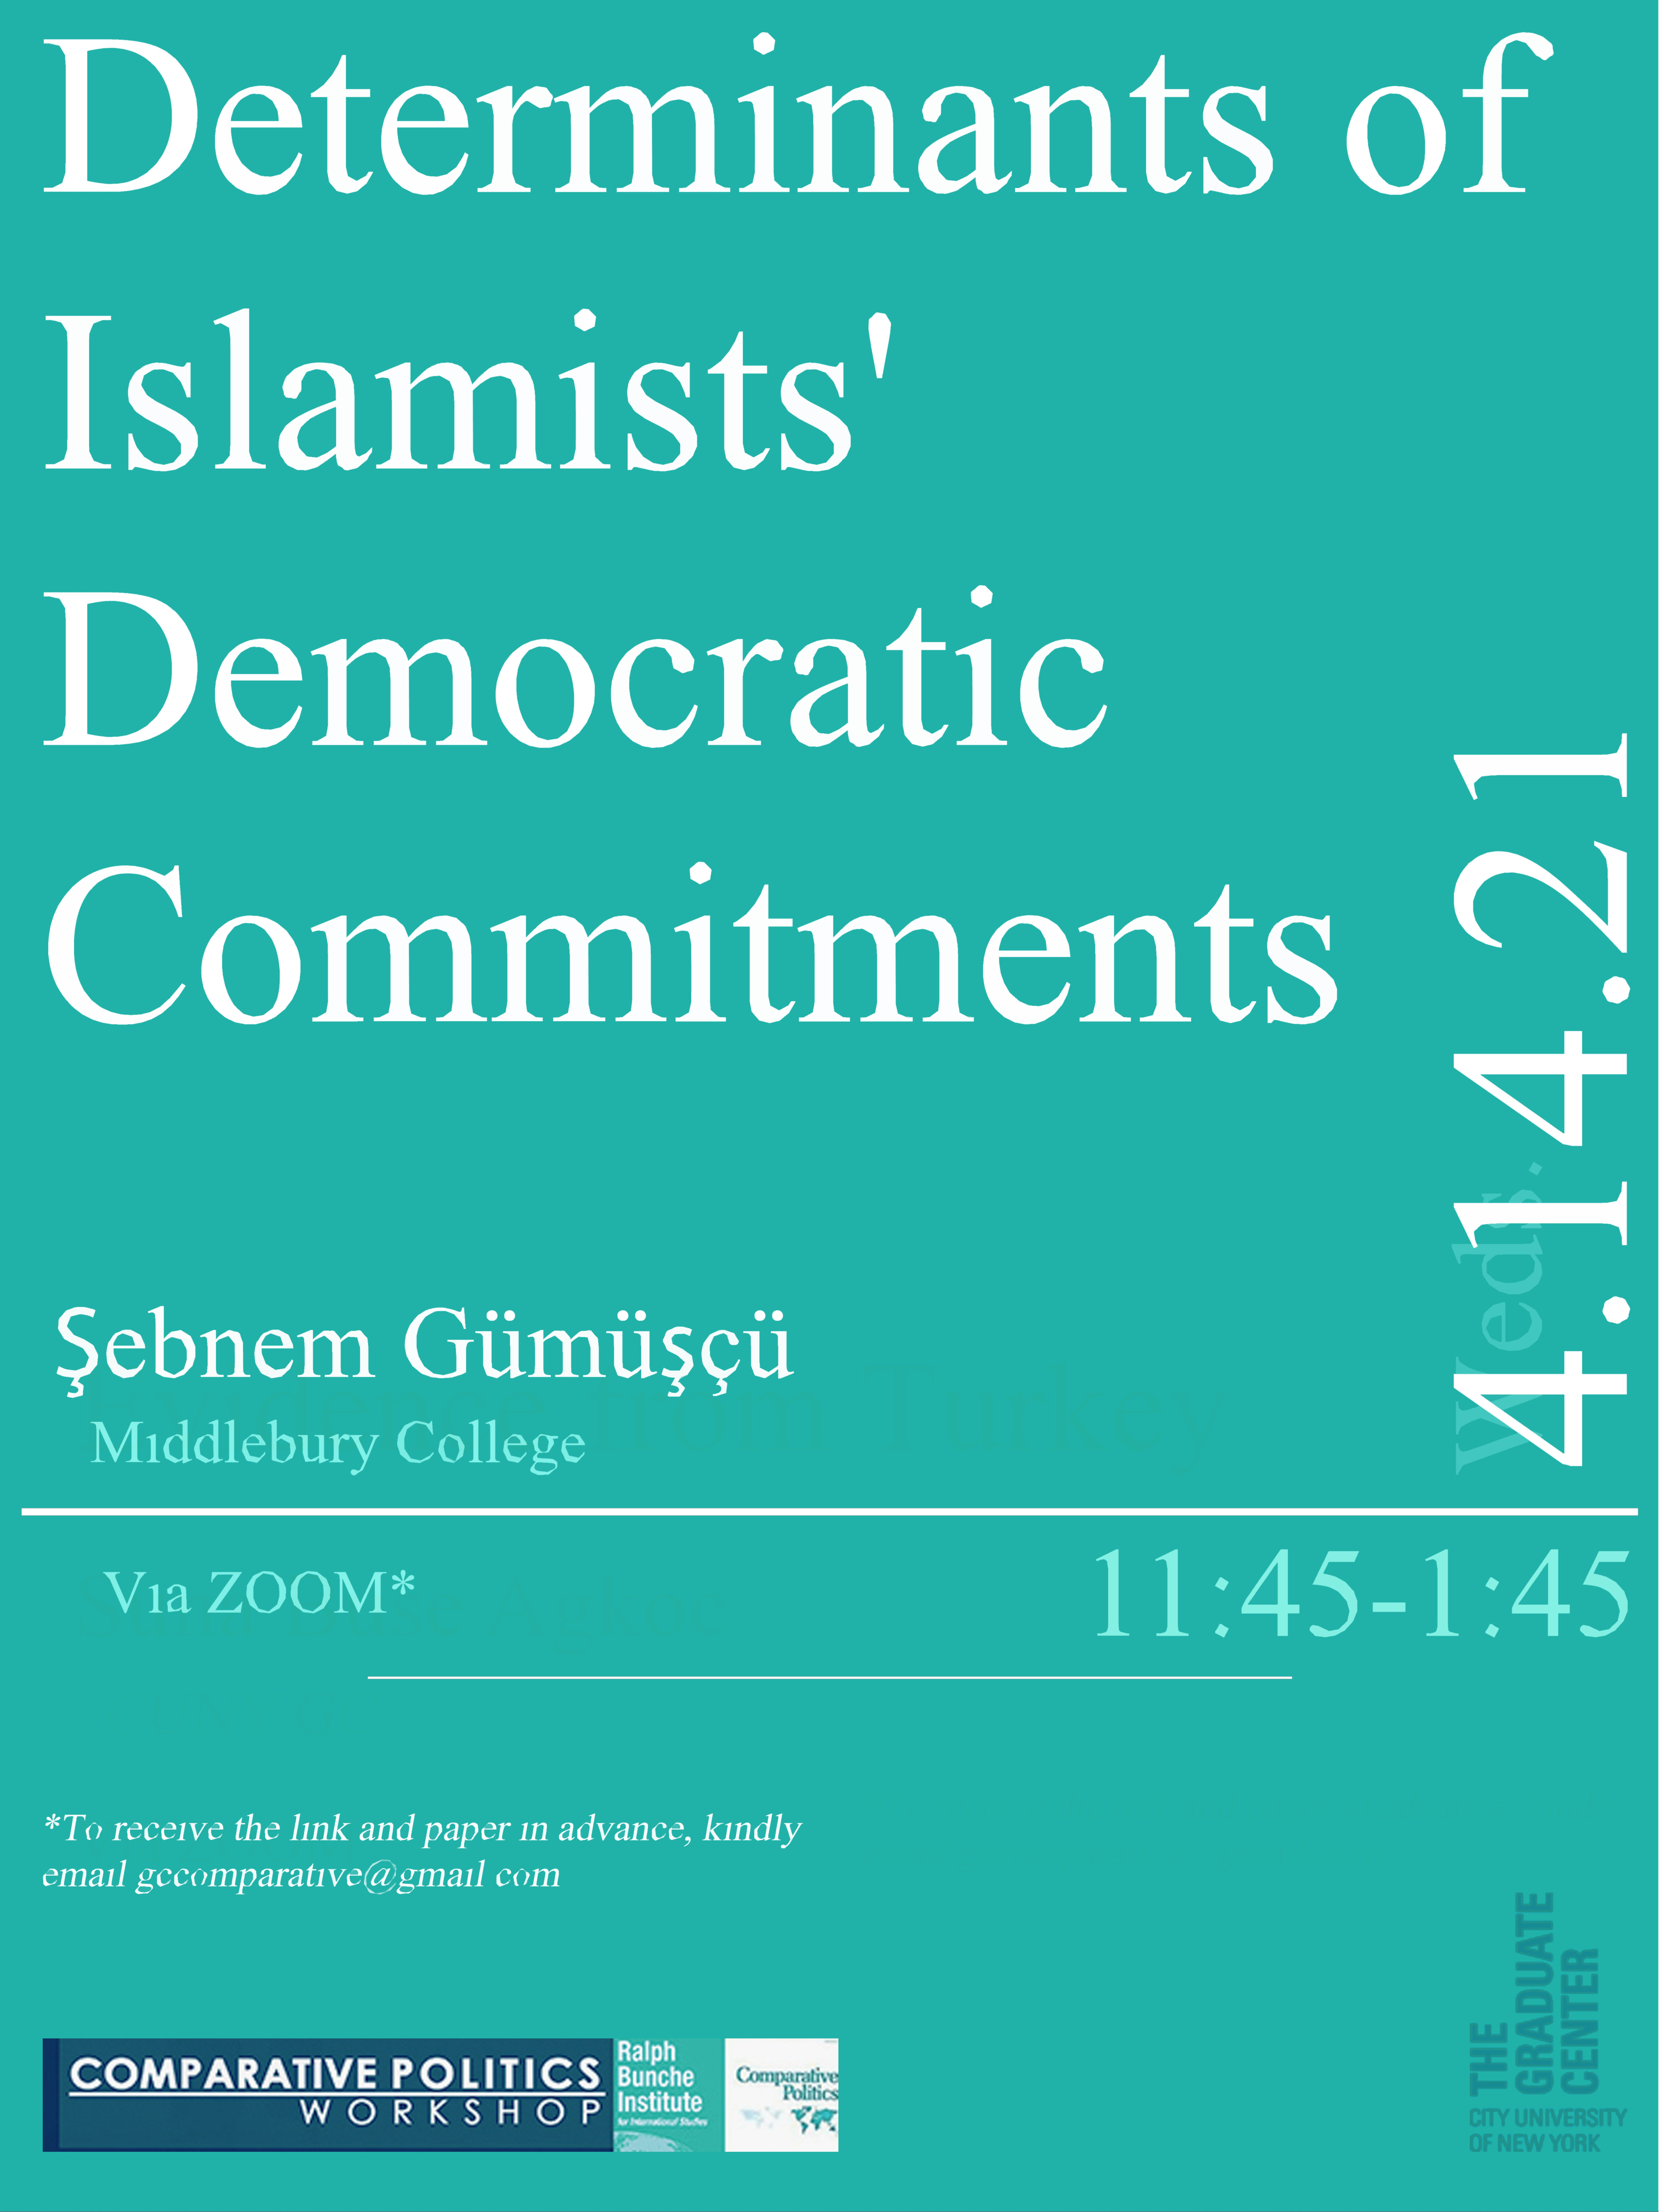 Comparative Politics Workshop: Sebnem Gumuscu, "Determinants of Islamists’ Democratic Commitments," Wednesday, April 14, 11:45am-1:45pm